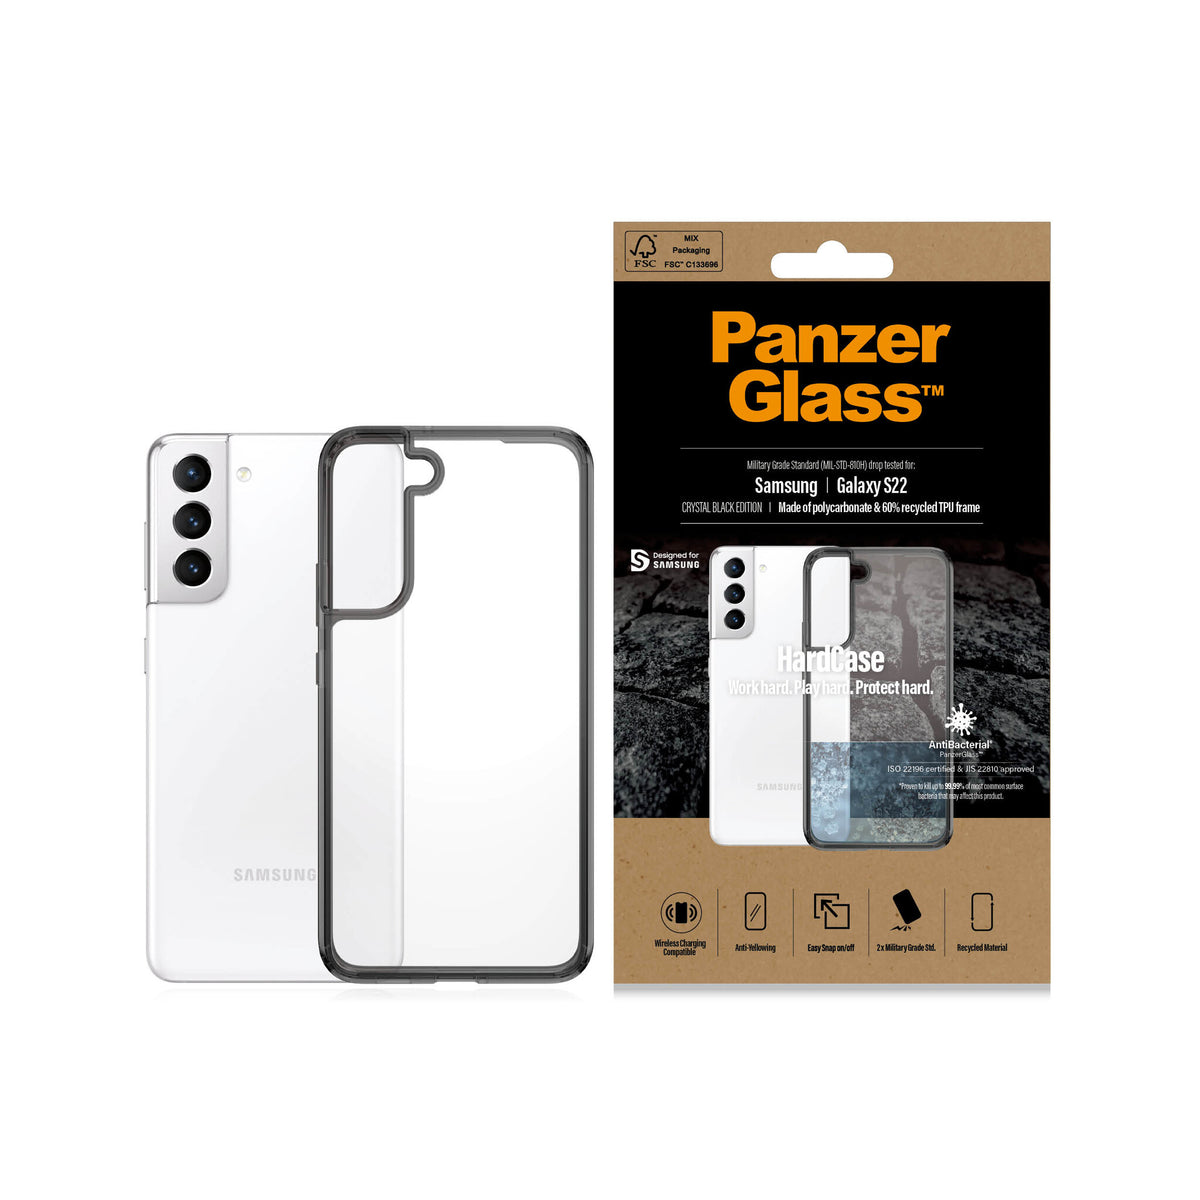 PanzerGlass ® HardCase for Galaxy S22 in Smokey Black